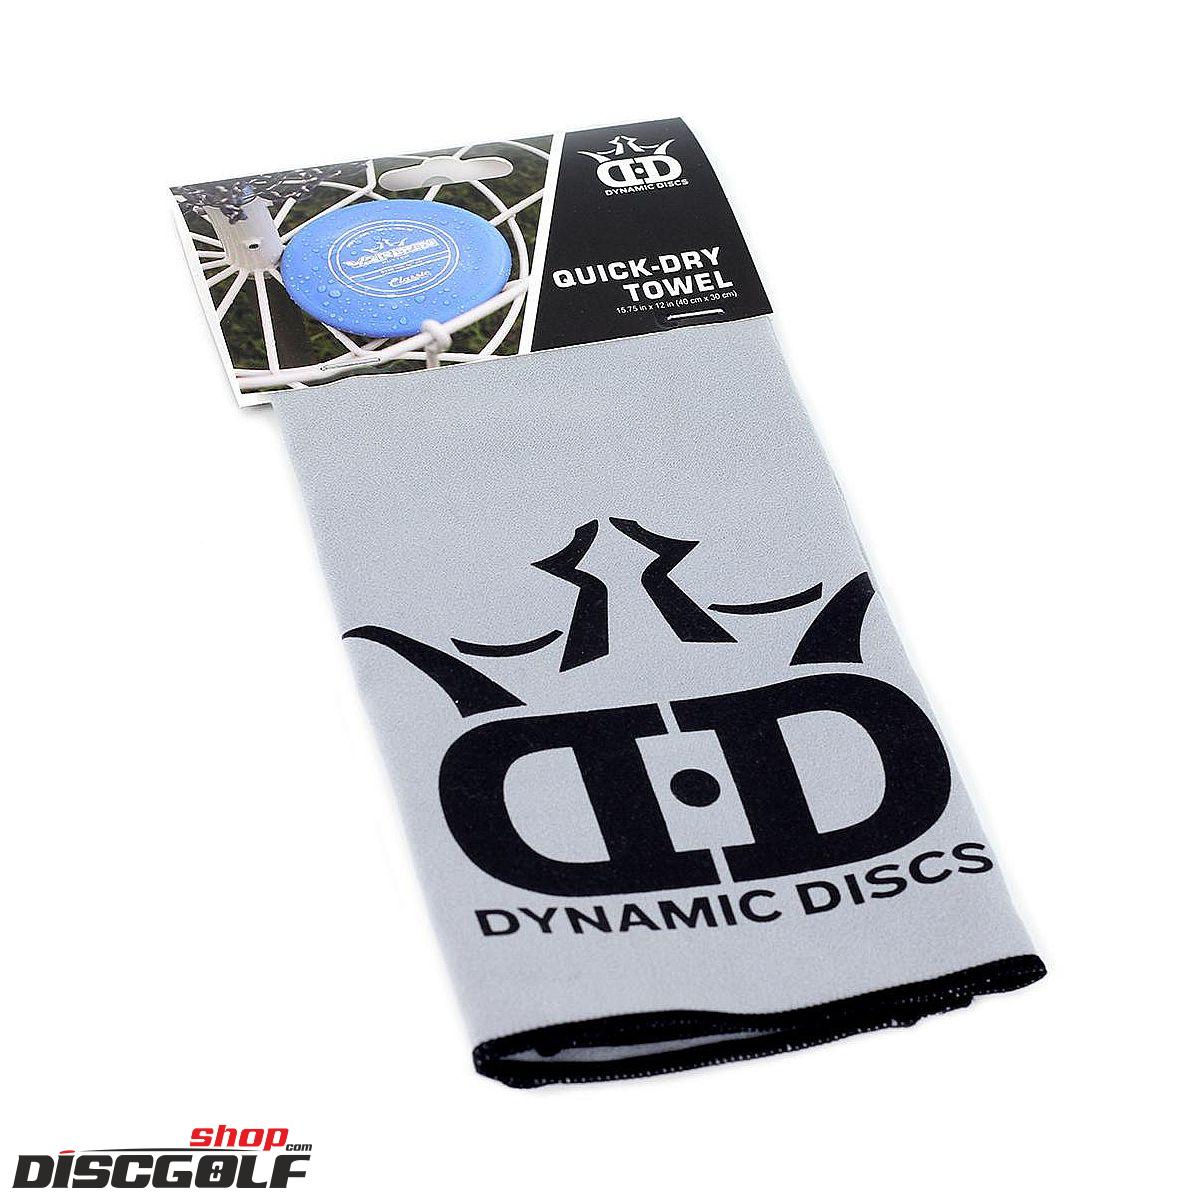 Dynamic Discs Ručník Quick-Dry Šedá/Grey (discgolf)